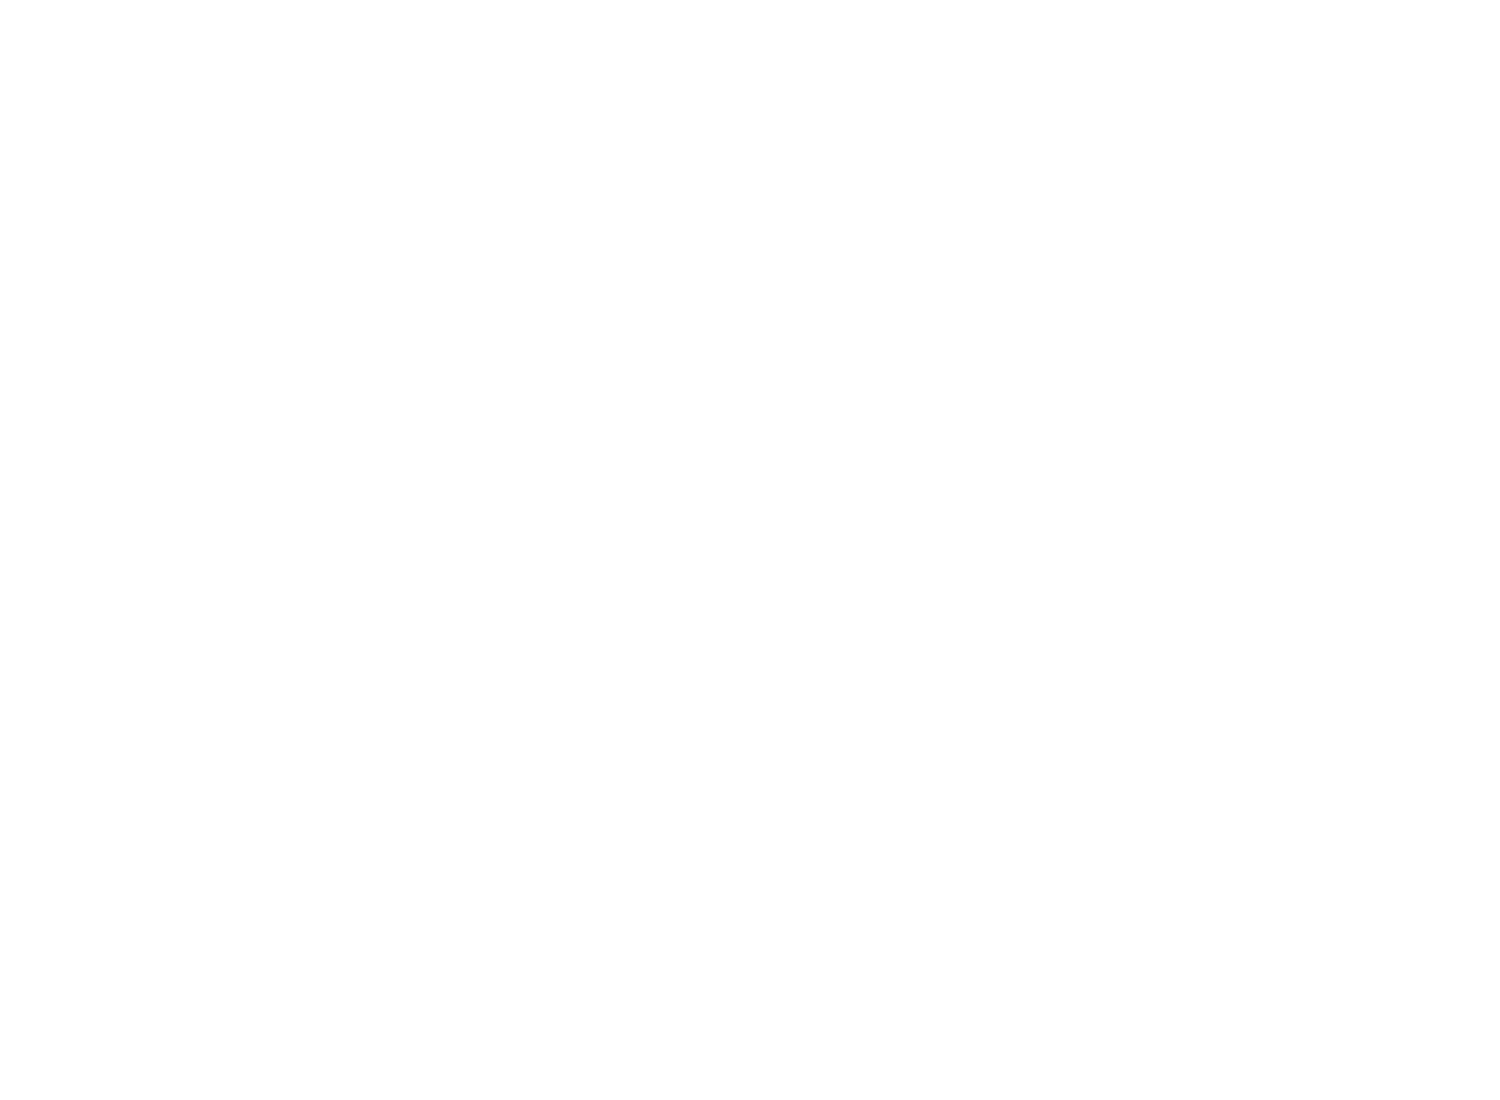 Hayball Cyclesport